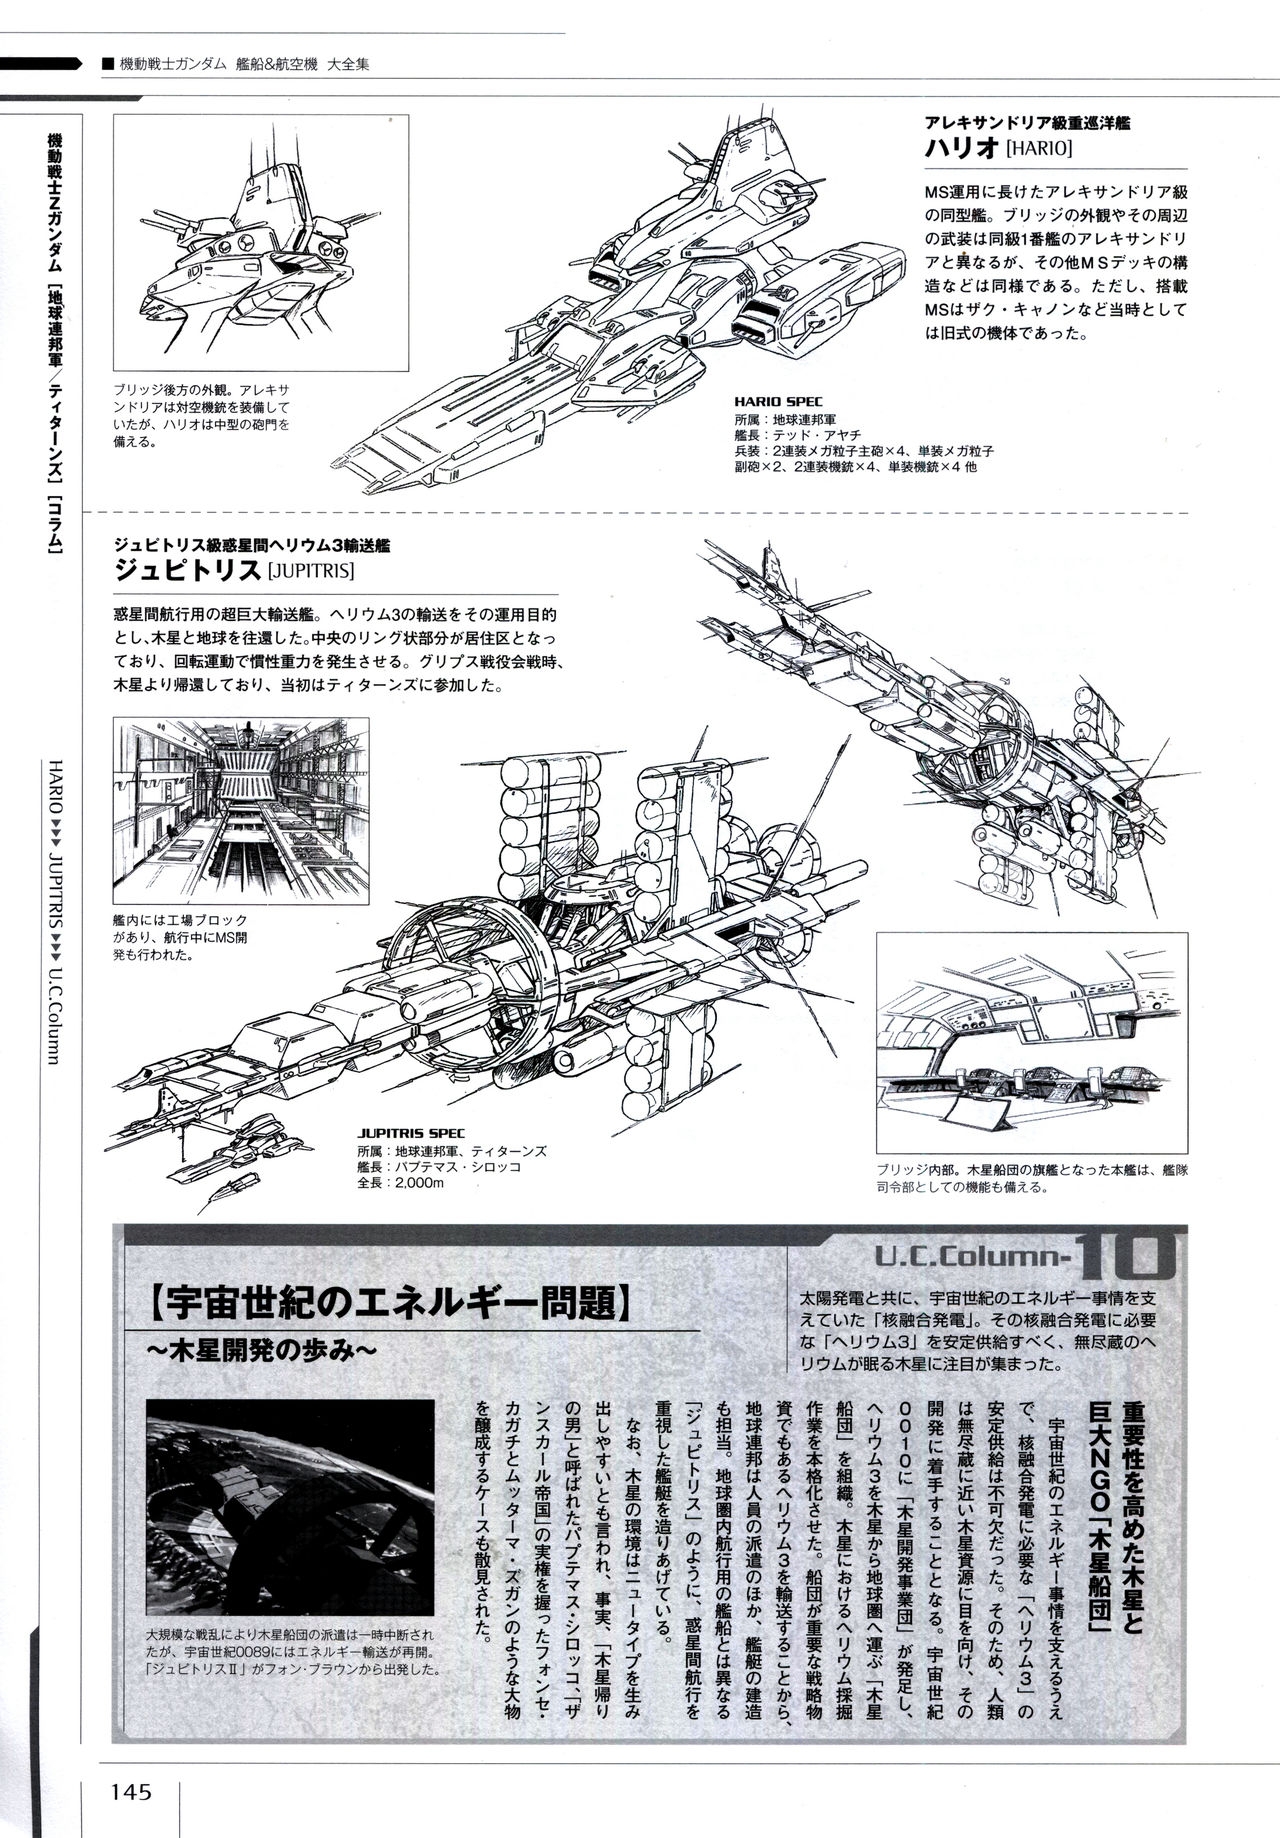 Mobile Suit Gundam - Ship & Aerospace Plane Encyclopedia - Revised Edition 150